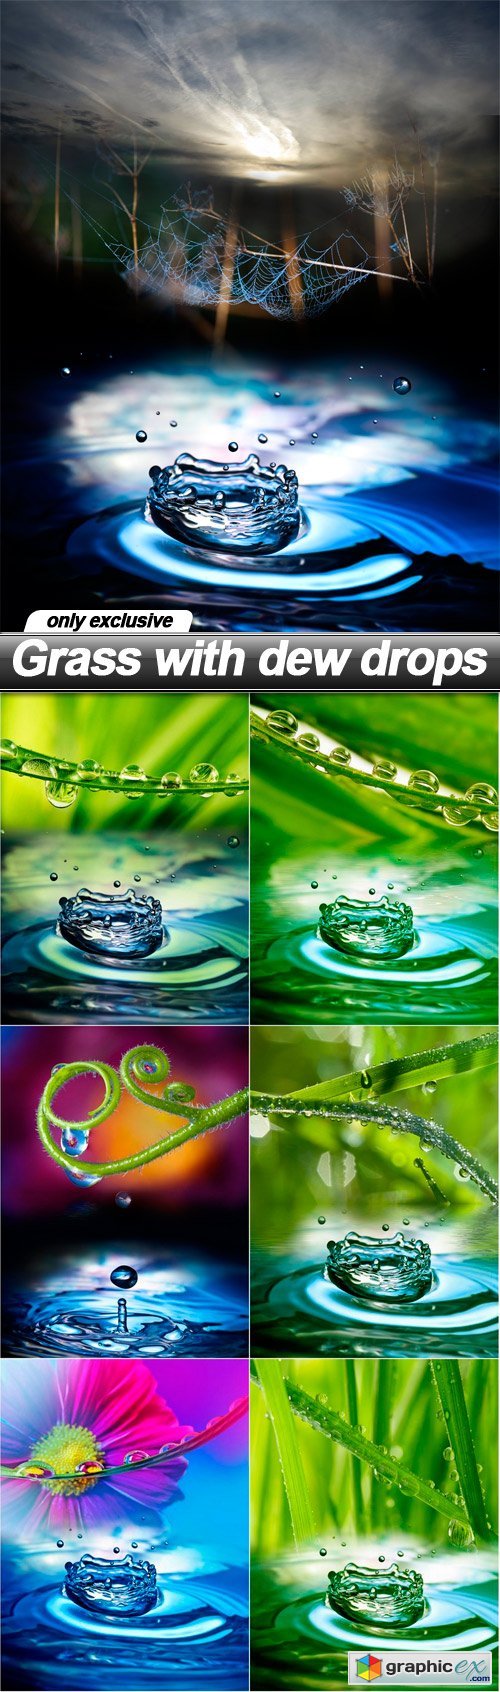 Grass with dew drops - 7 UHQ JPEG